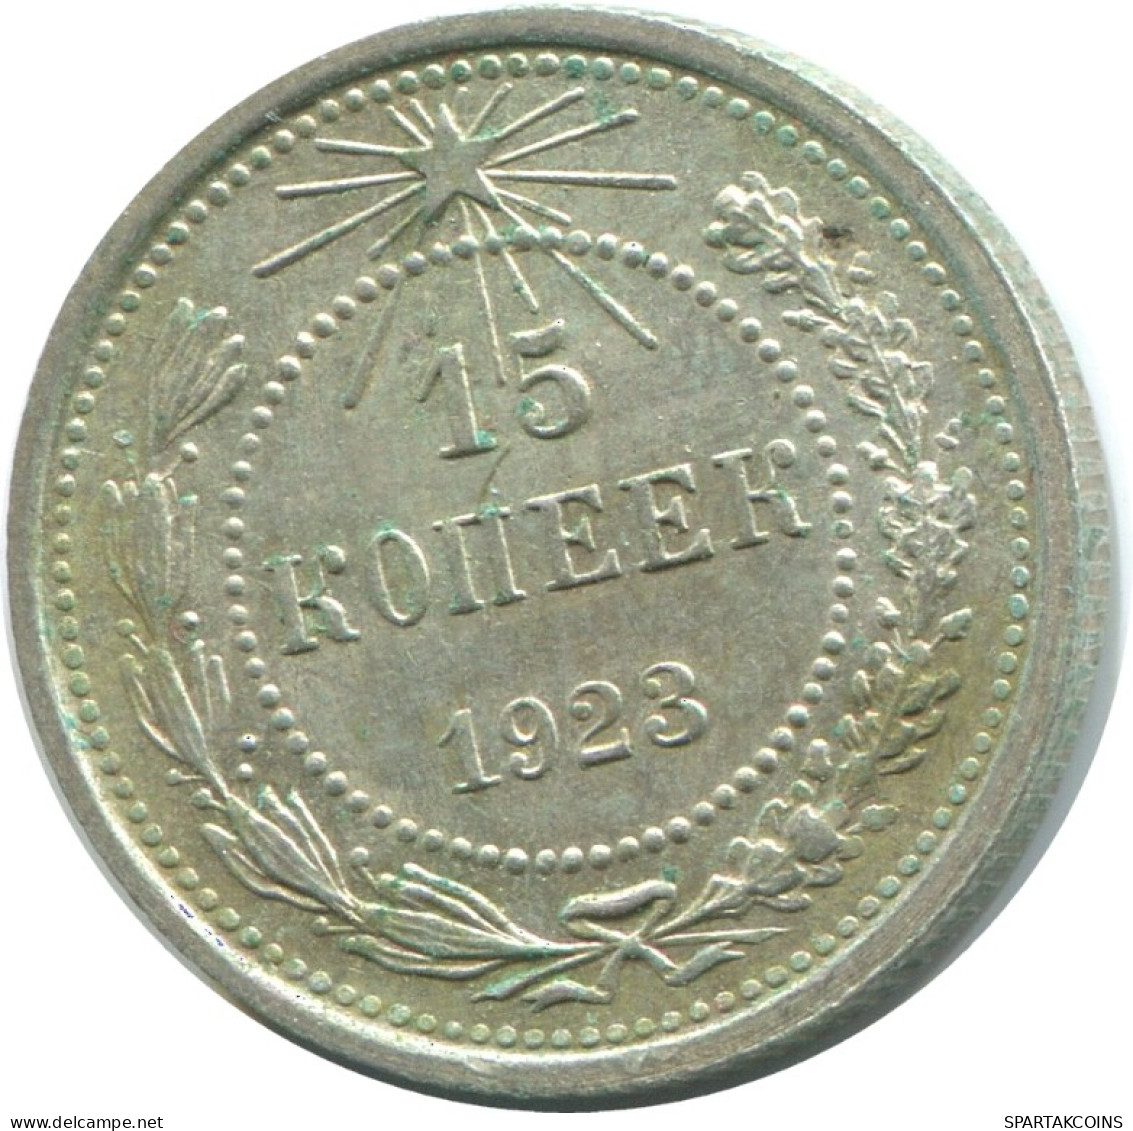 15 KOPEKS 1923 RUSSIA RSFSR SILVER Coin HIGH GRADE #AF162.4.U.A - Russie